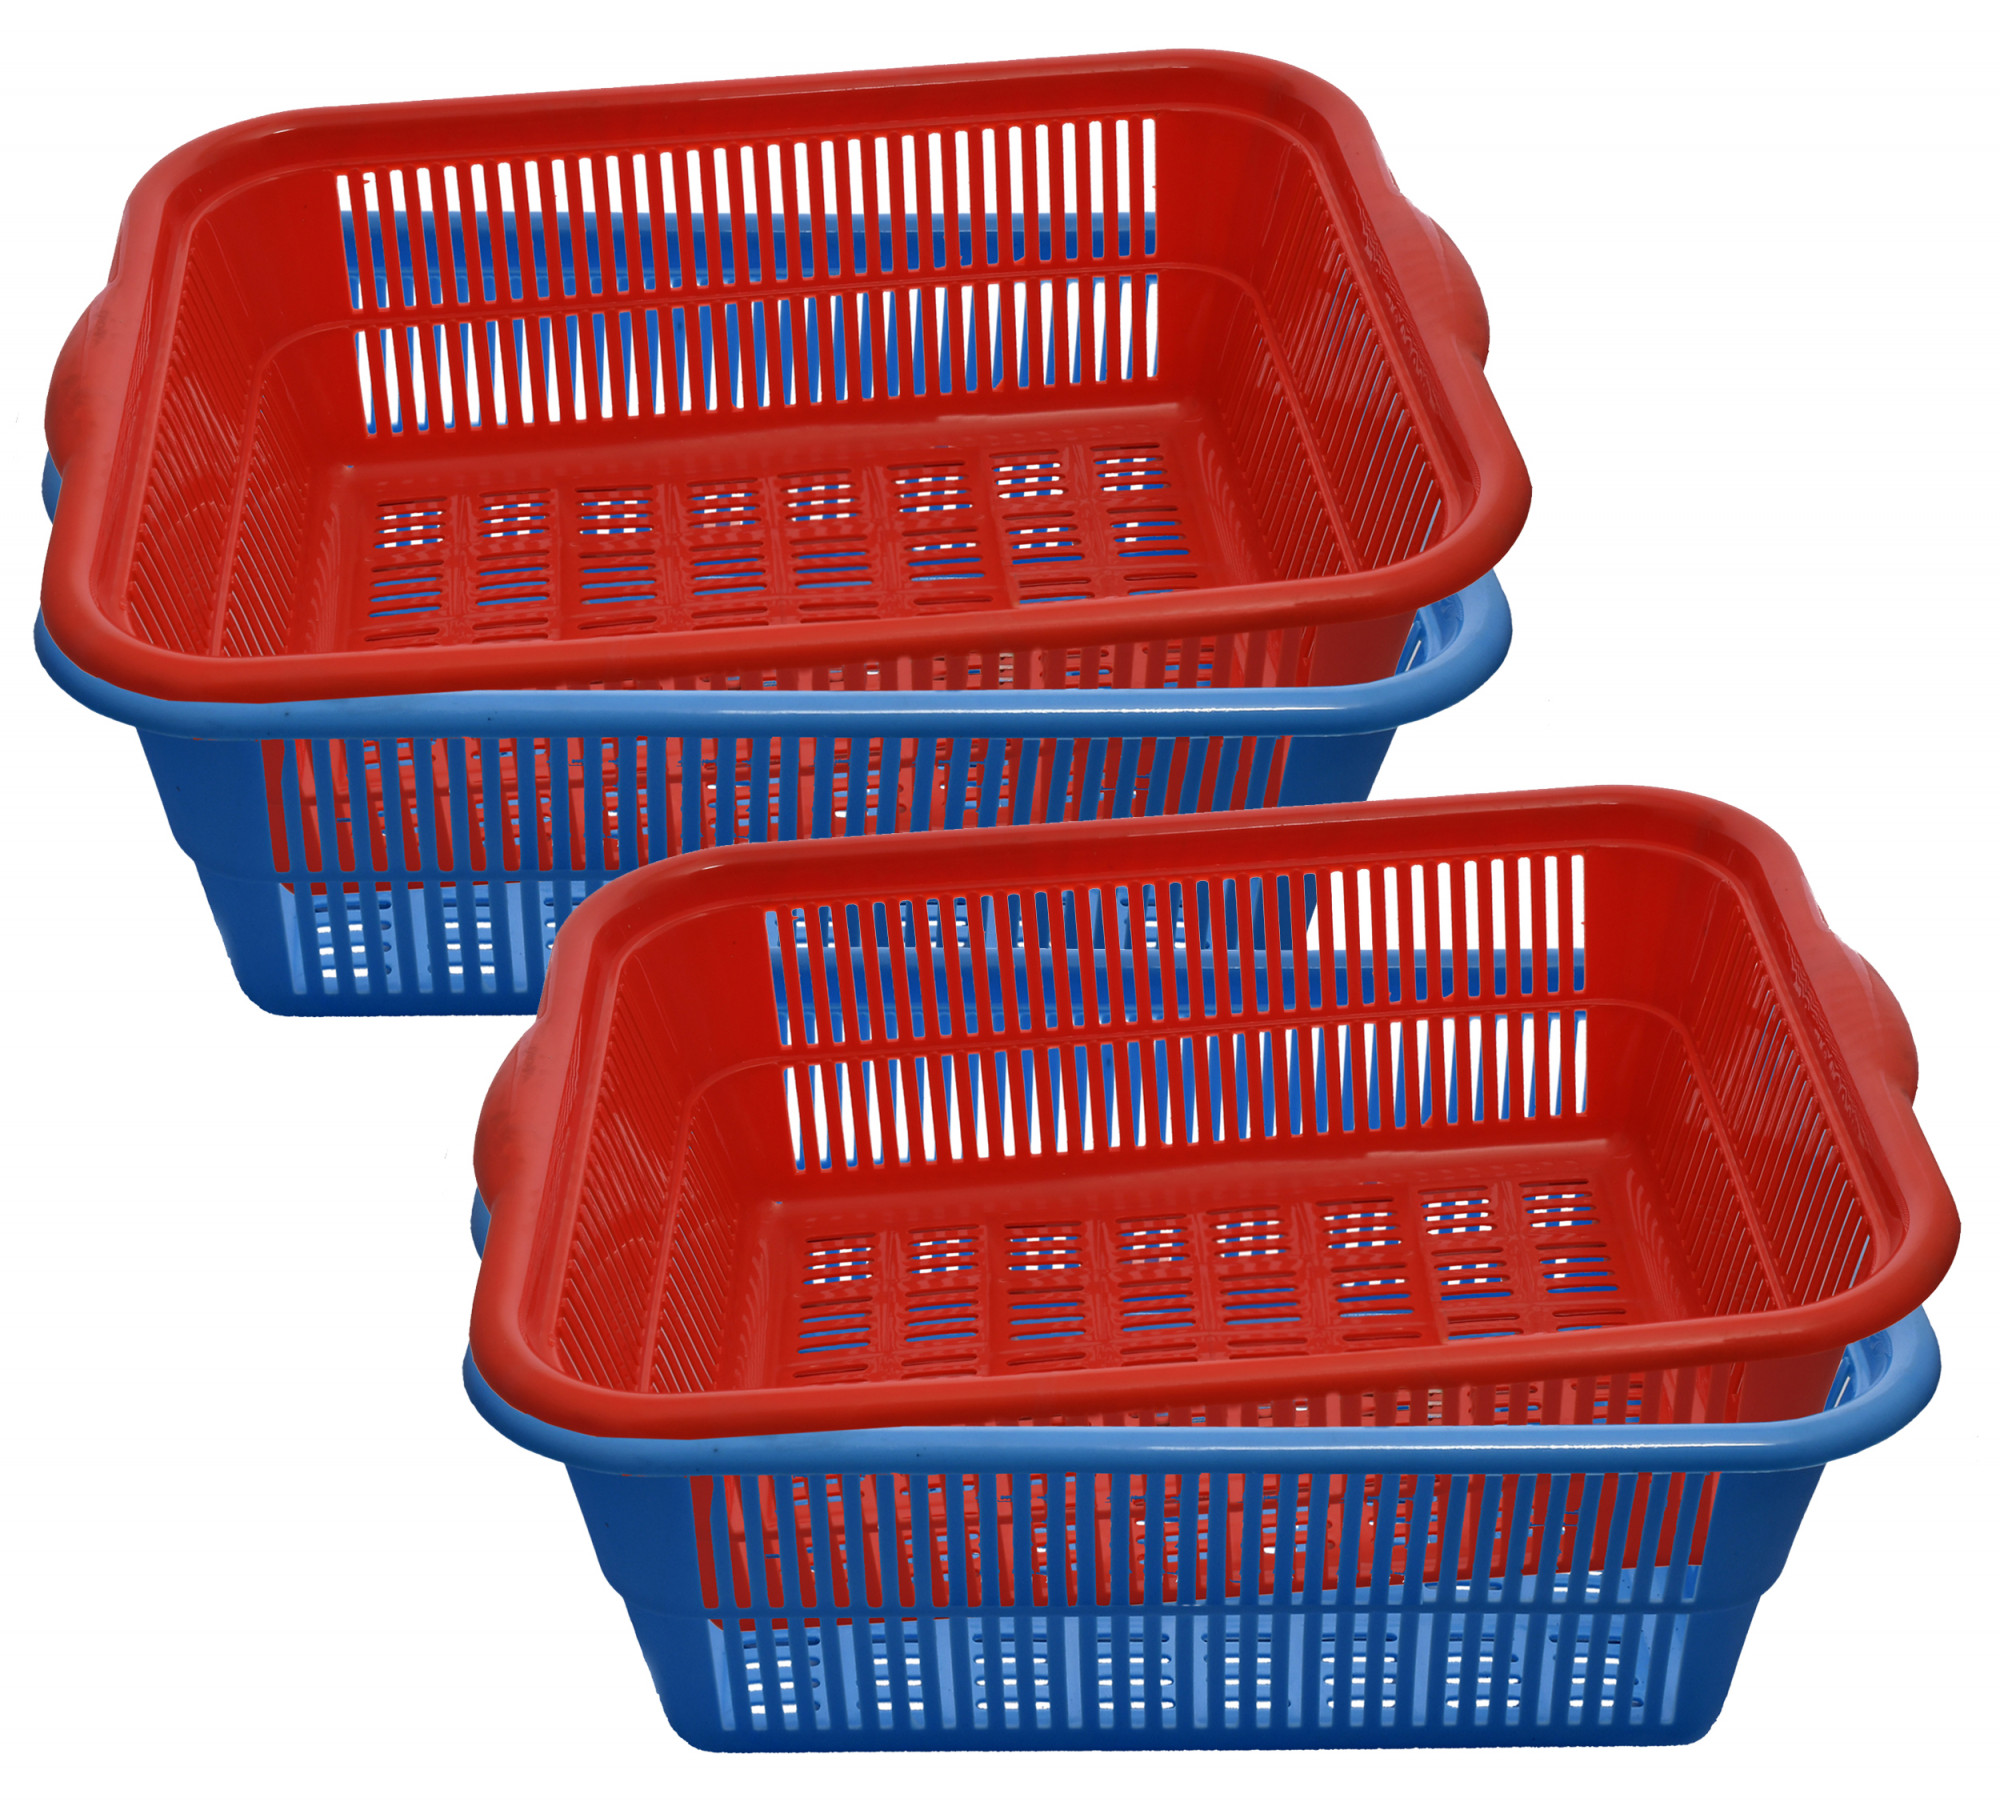 Kuber Industries Plastic Kitchen Medium Size Dish Rack Drainer Vegetables And Fruits Washing Basket Dish Rack Multipurpose Organizers (Blue & Red)-KUBMART714